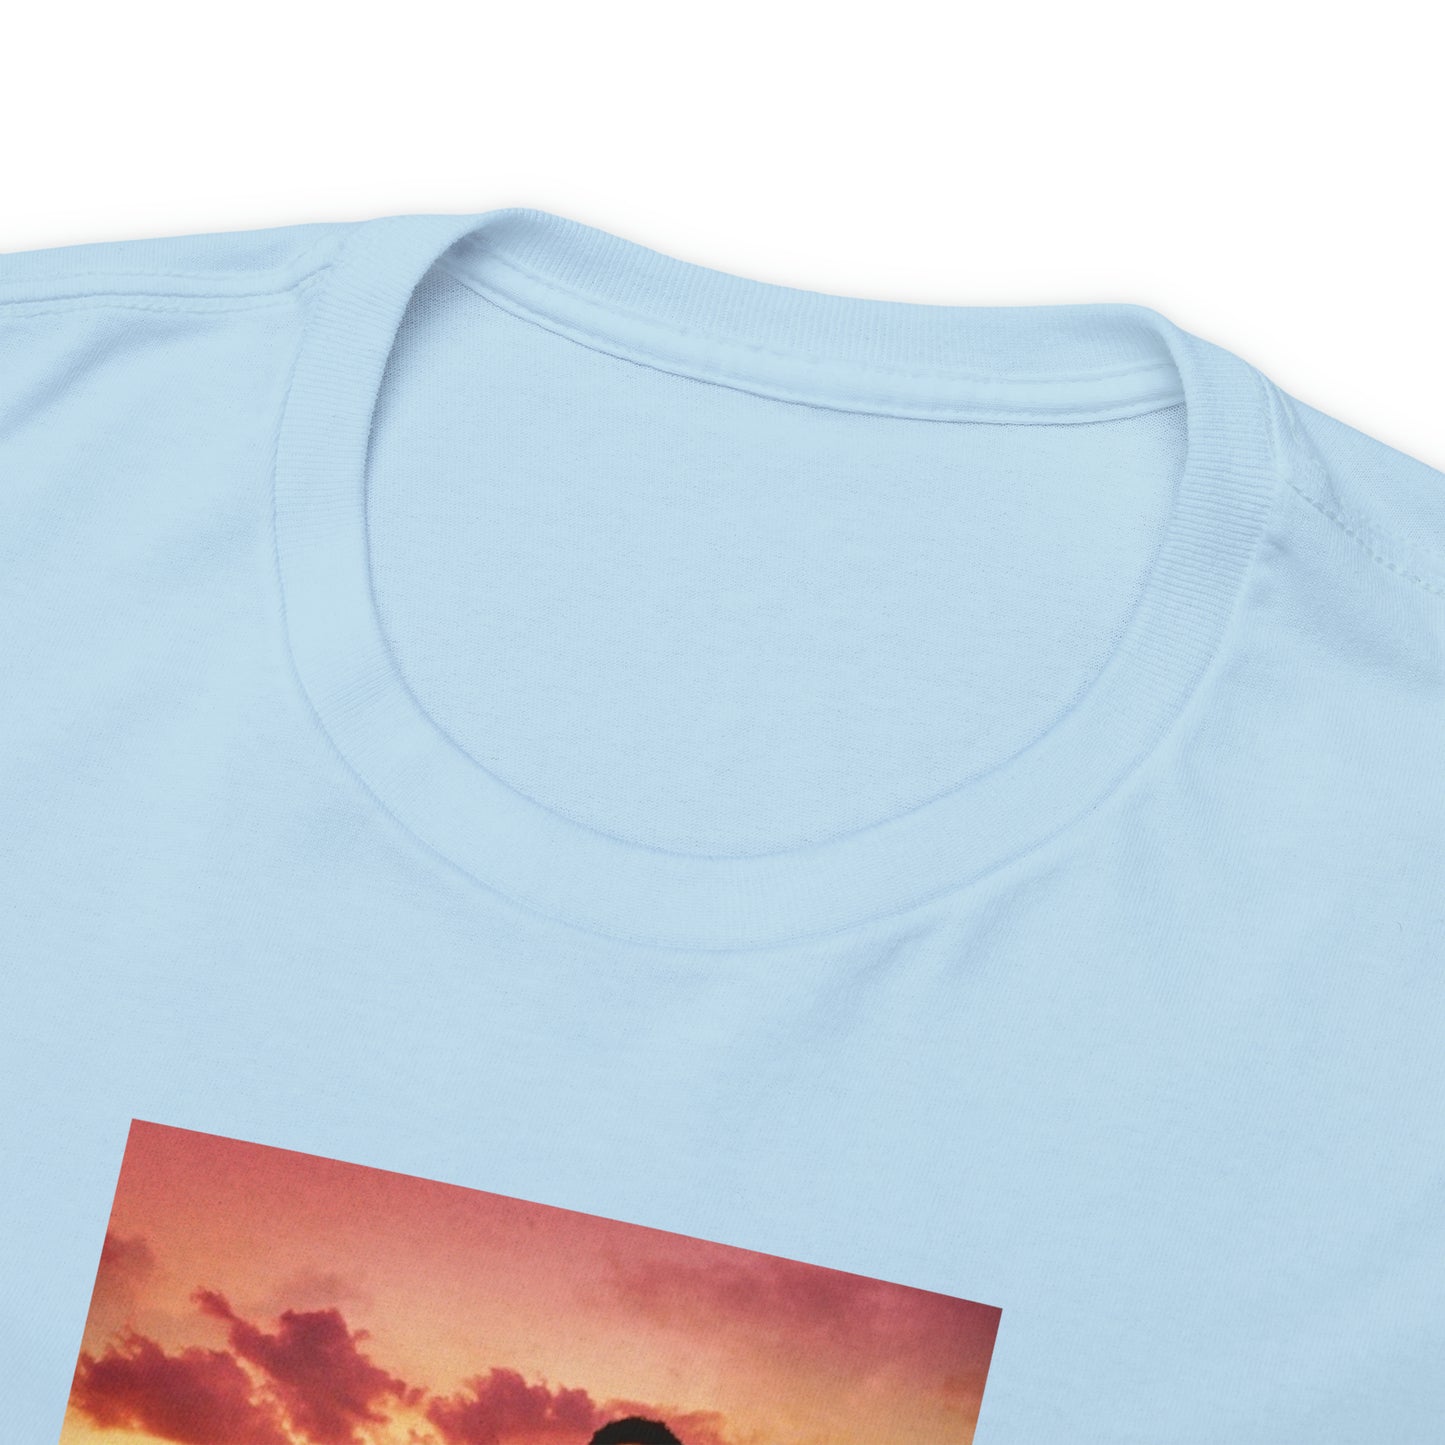 Miami Vice T-Shirt